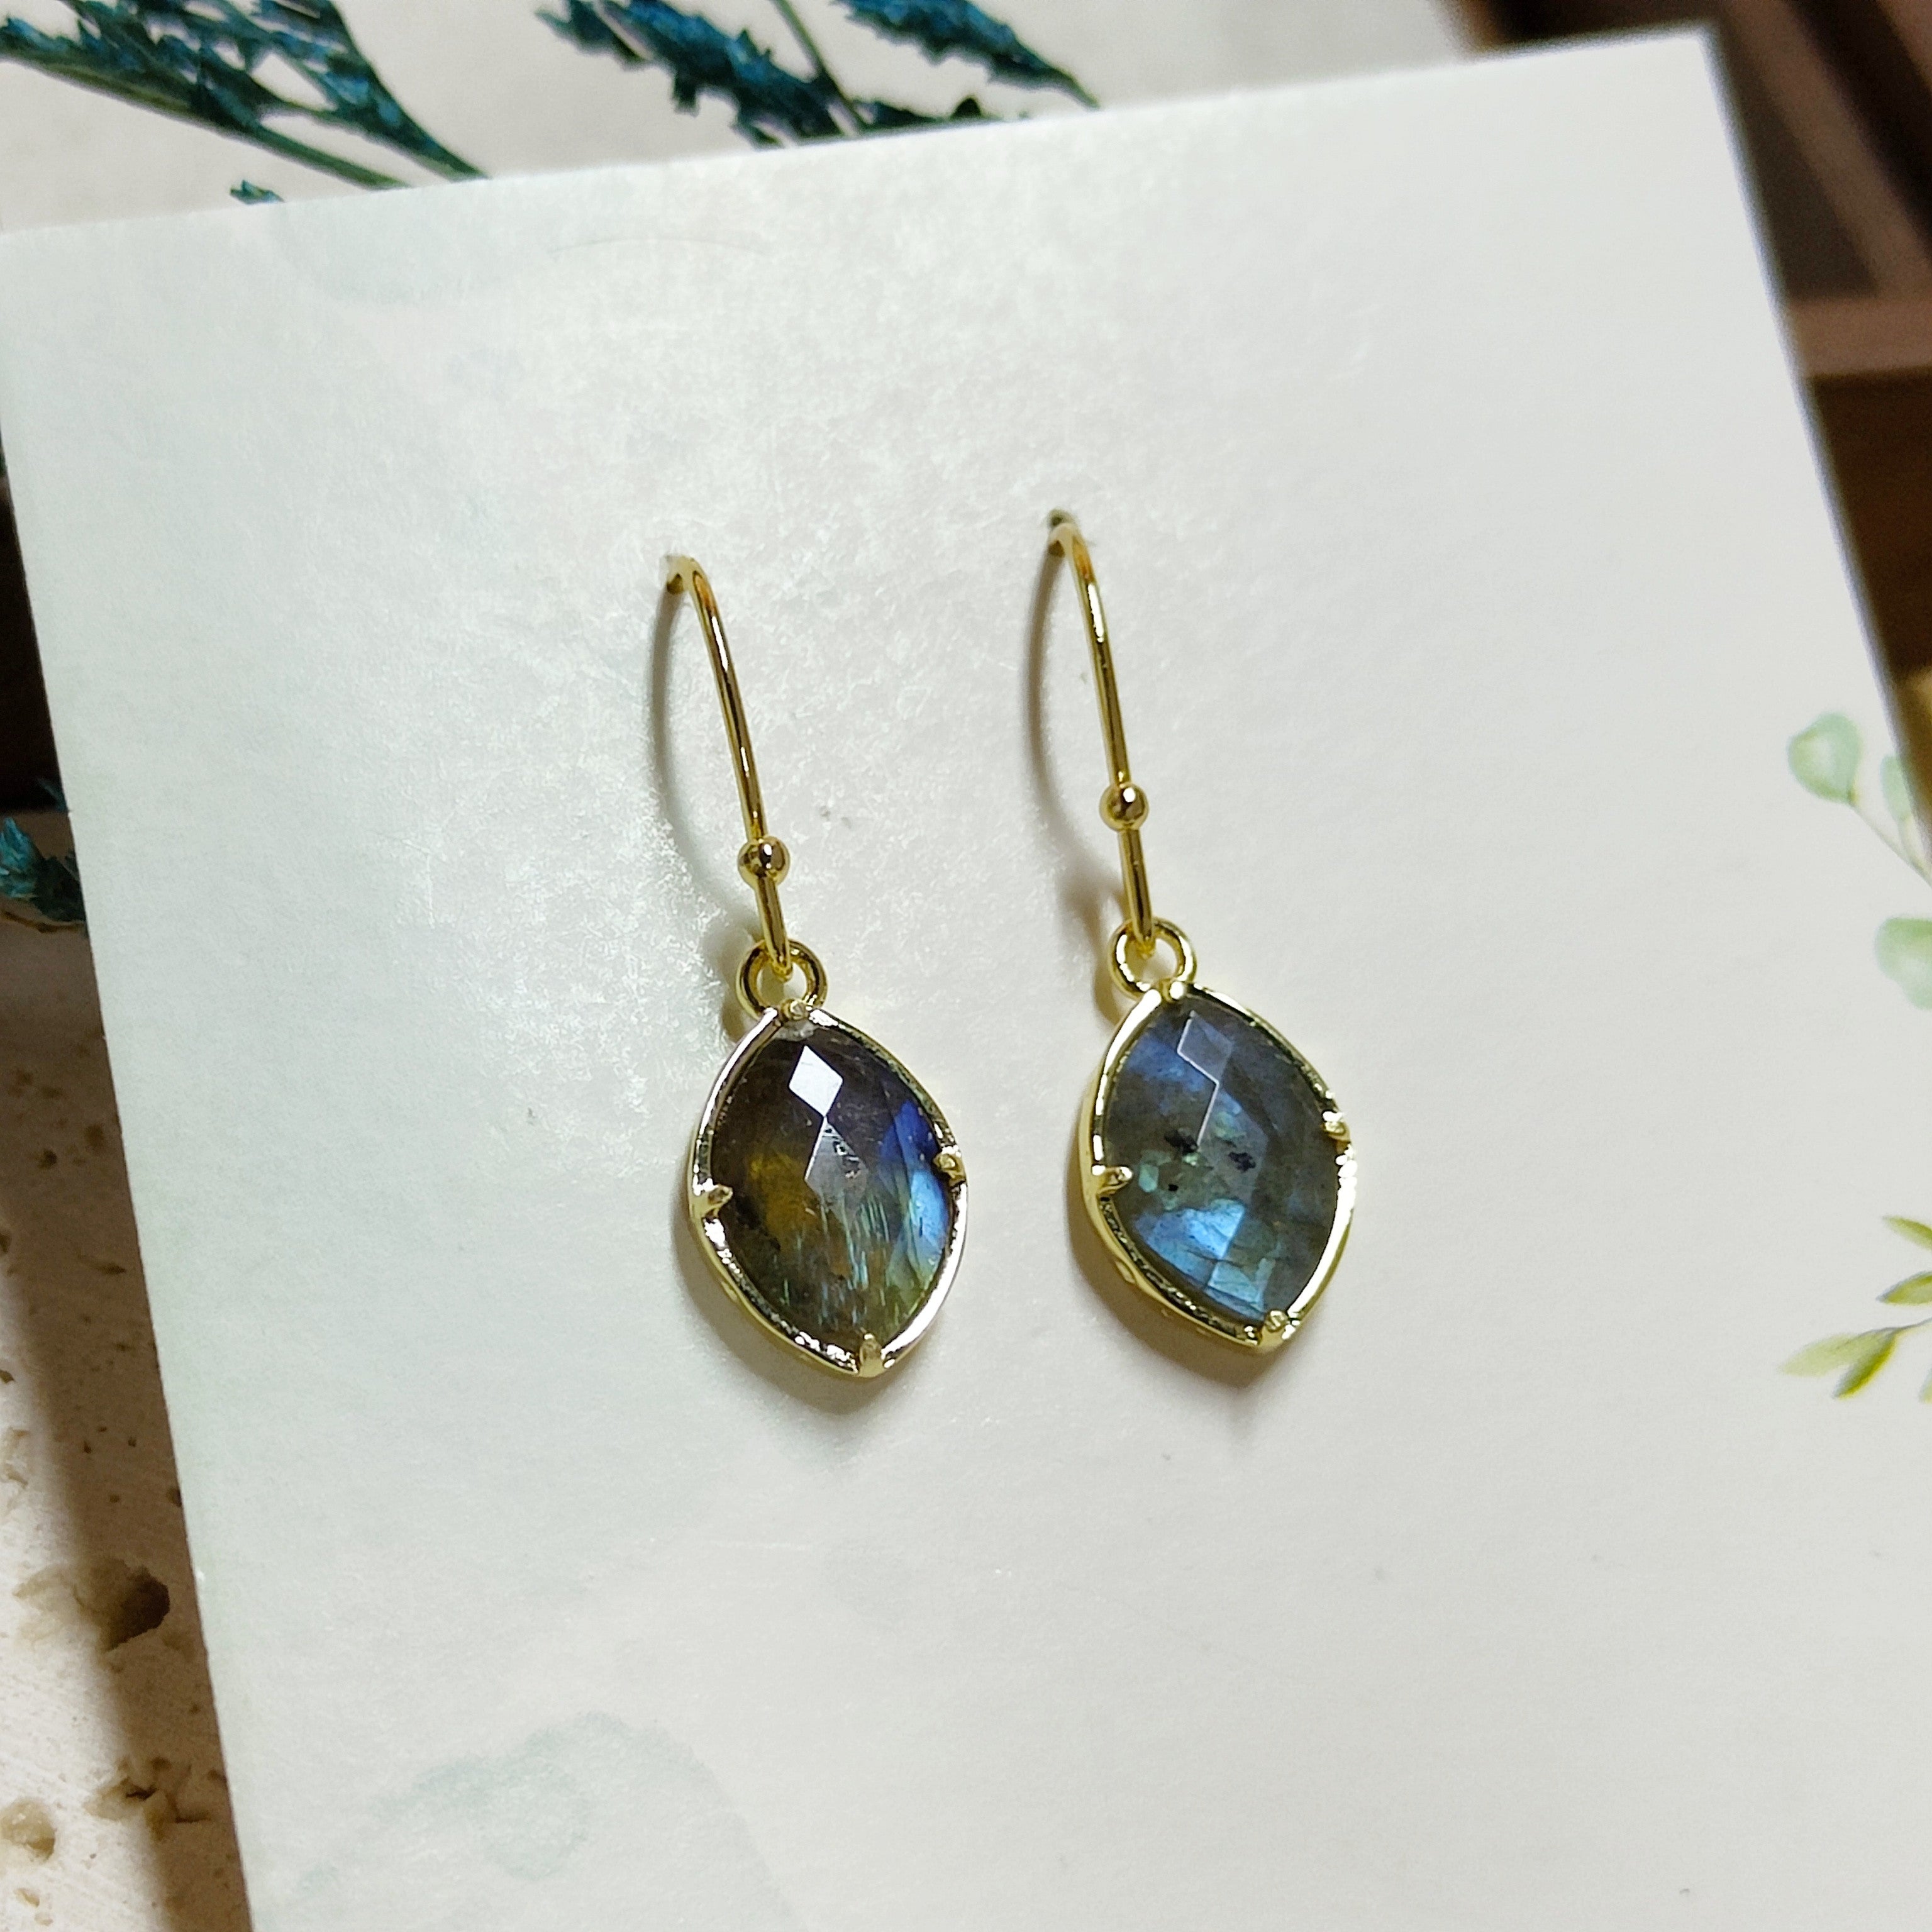 Wholesale Gold Plated Marquise Gemstone Earrings, Healing Crystals Stone Earrings Jewelry AL573 labradorite earrings